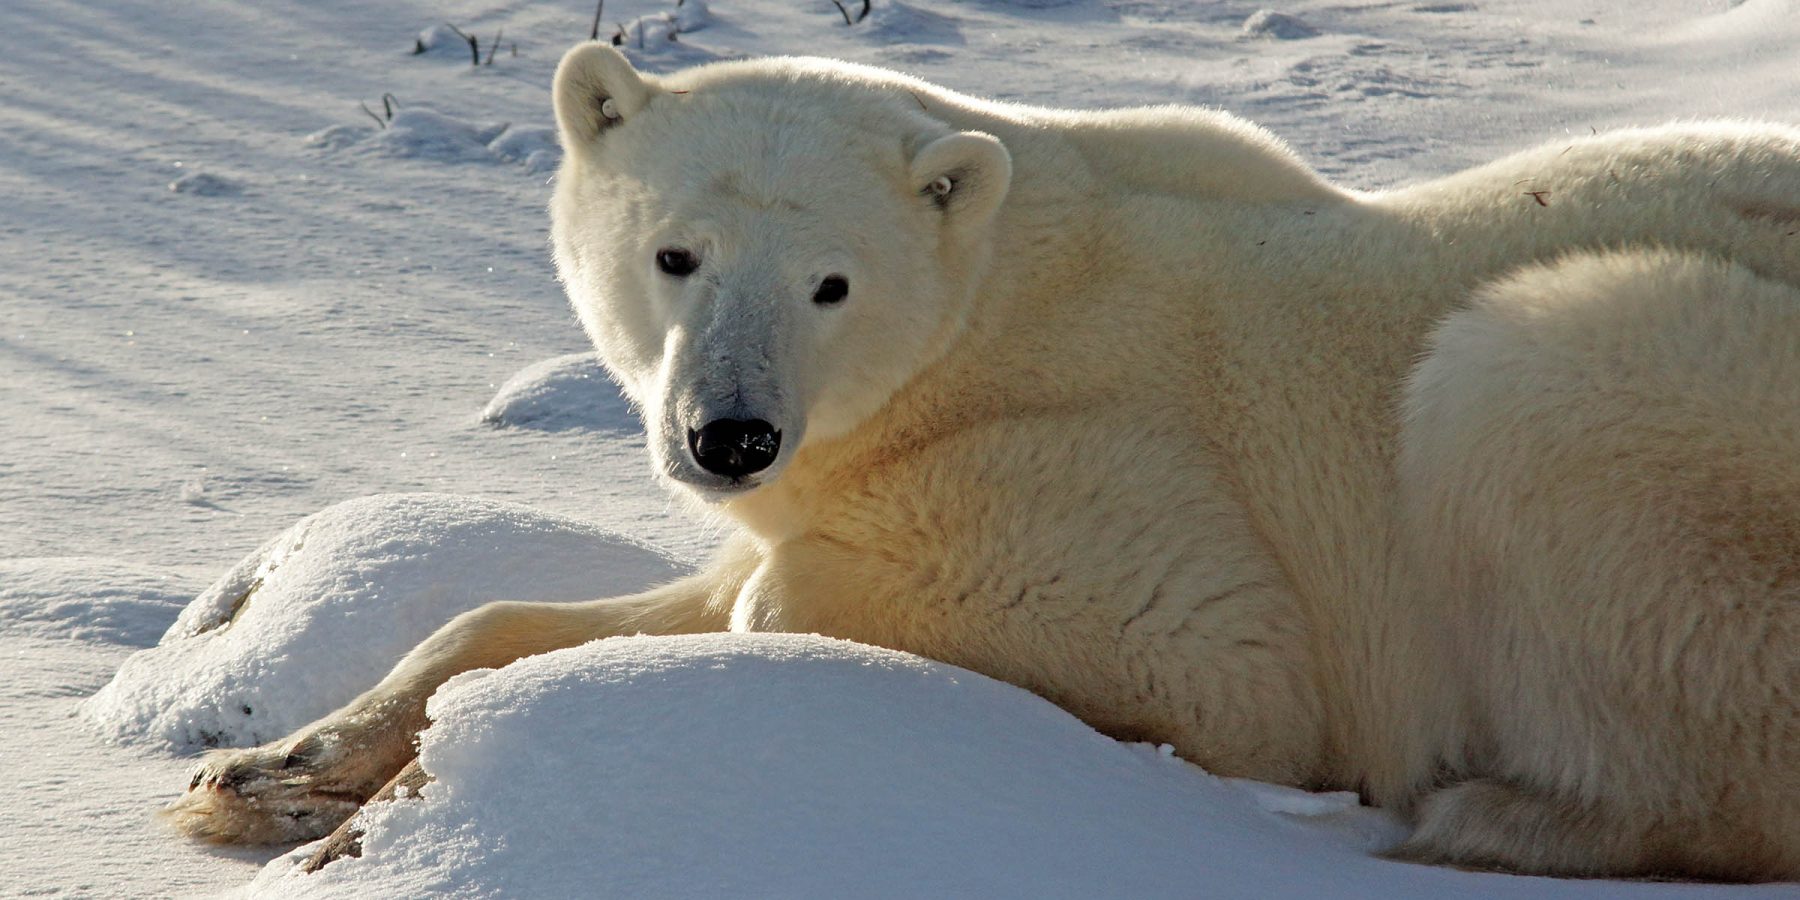 ijsberen, churchill, reis churchill, reis ijsberen, arctisch canada, tundra buggy, frontiers north, polar bear